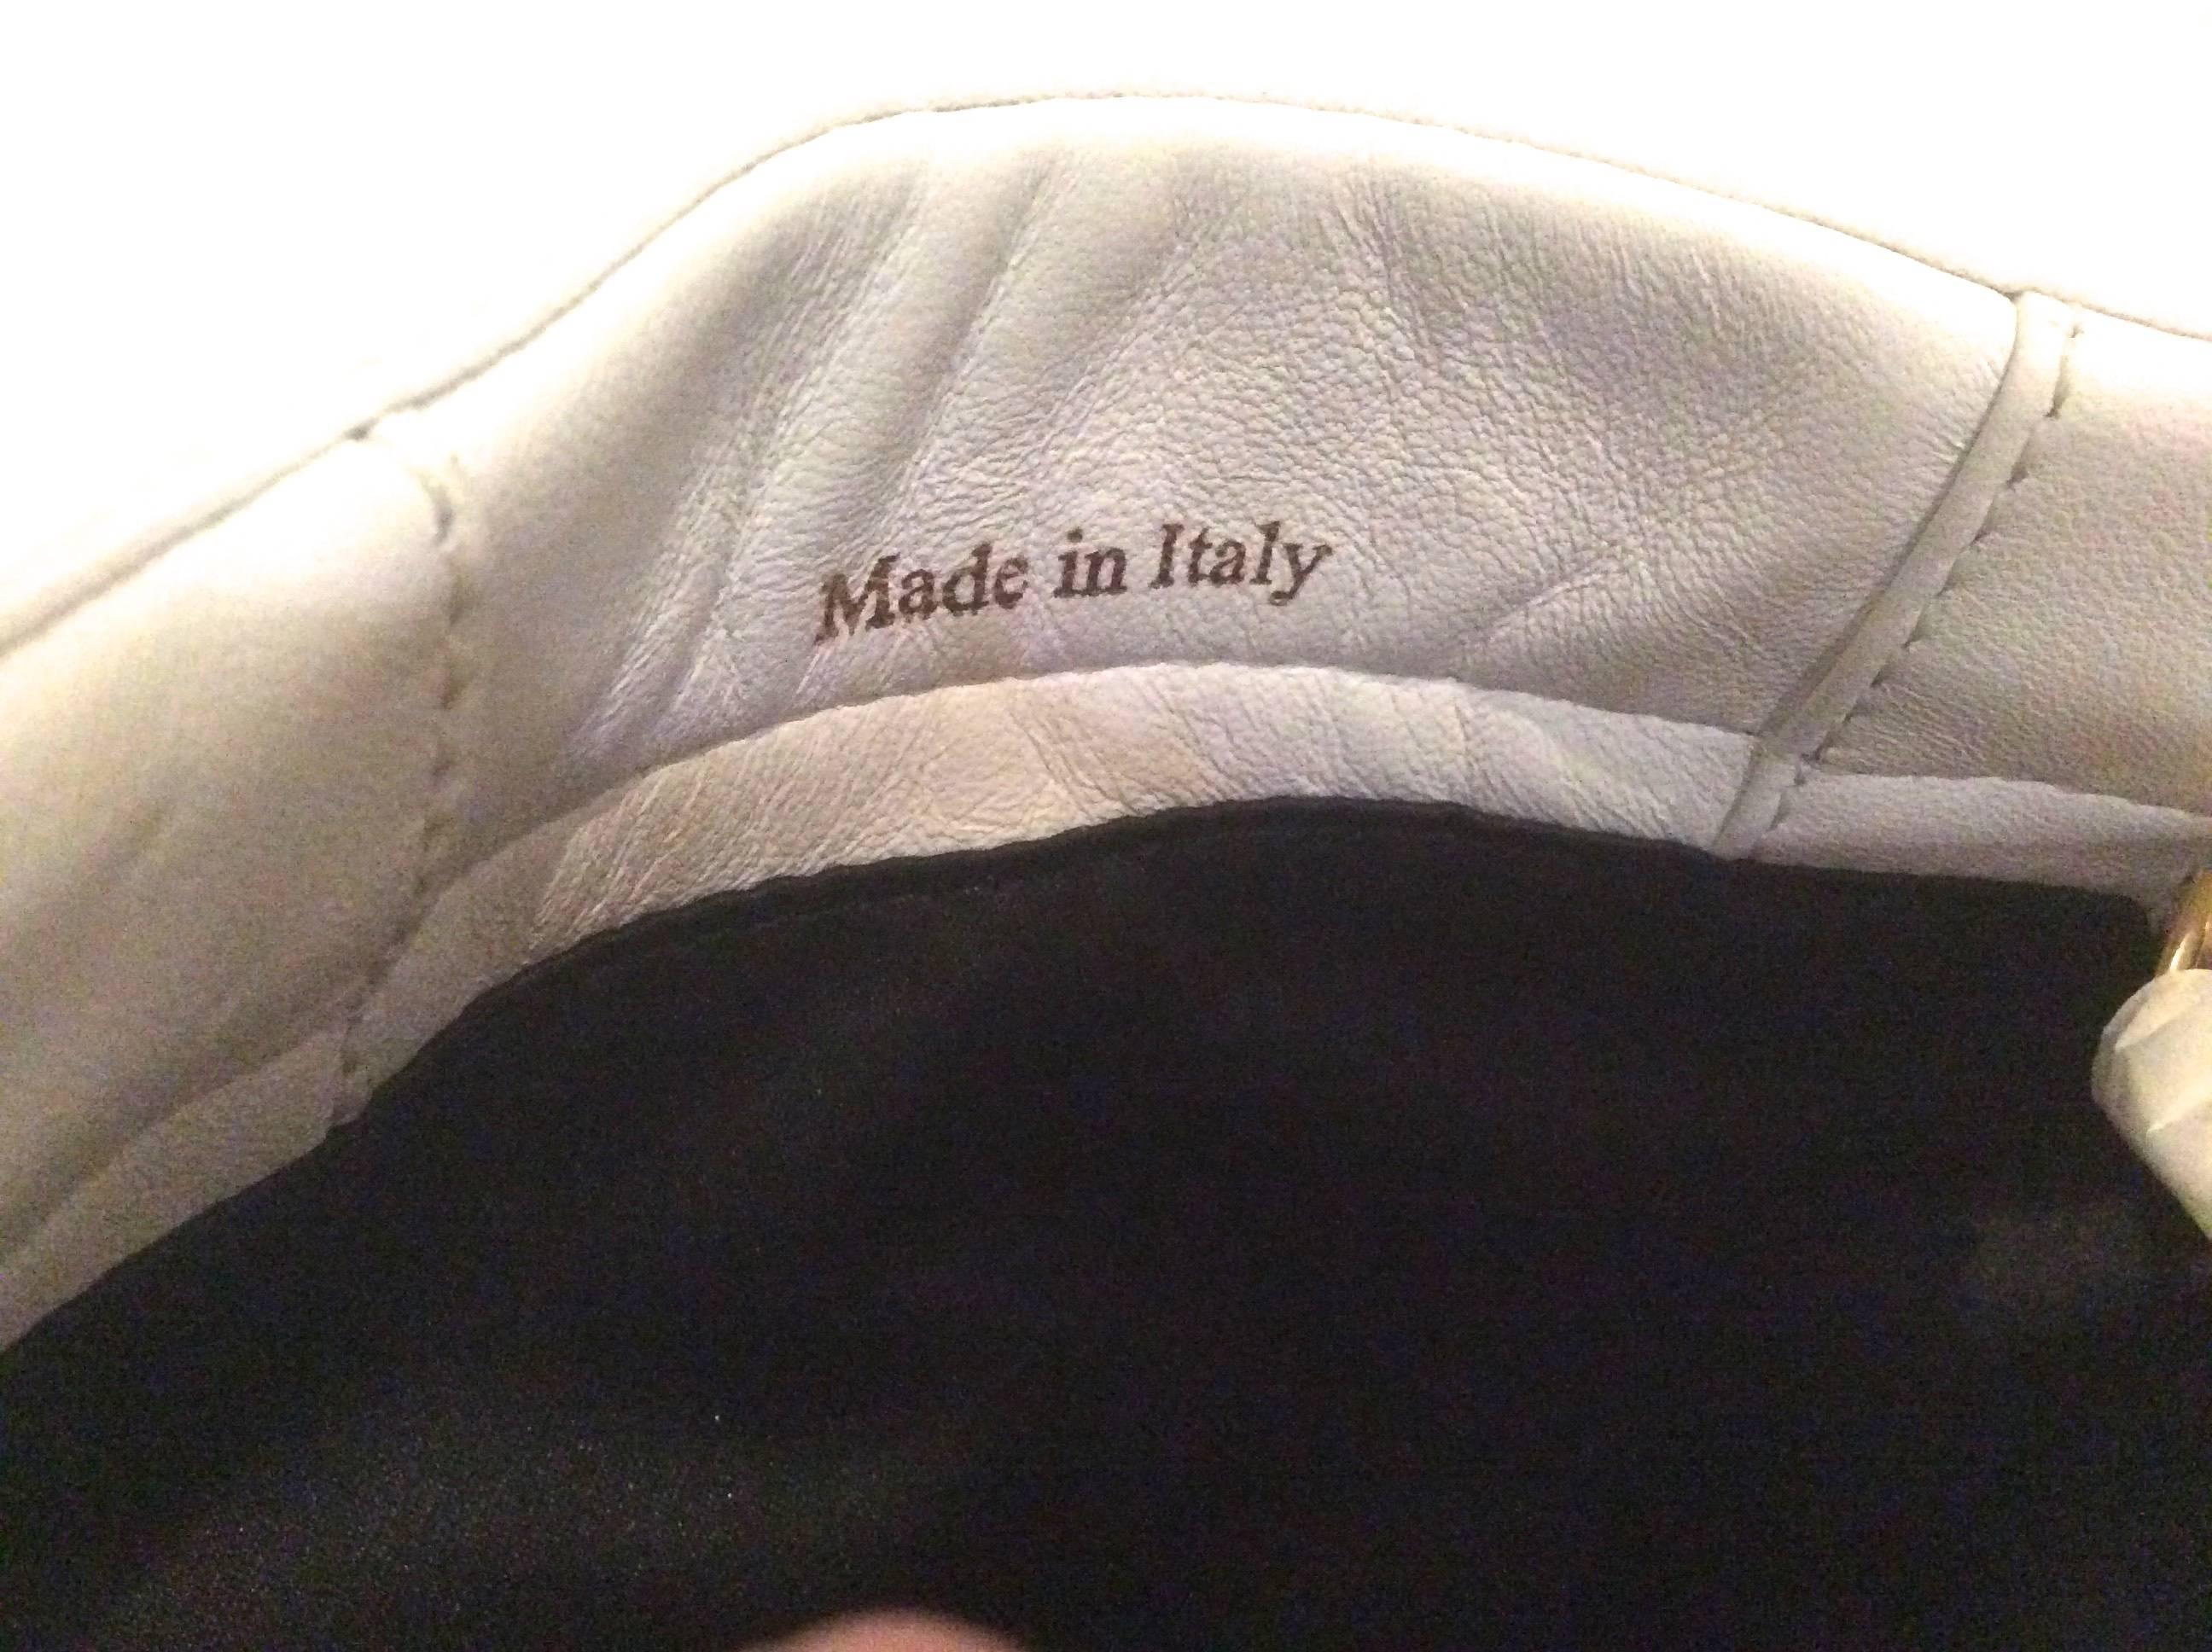 Moschino Underwear Bag In New Condition For Sale In Boca Raton, FL